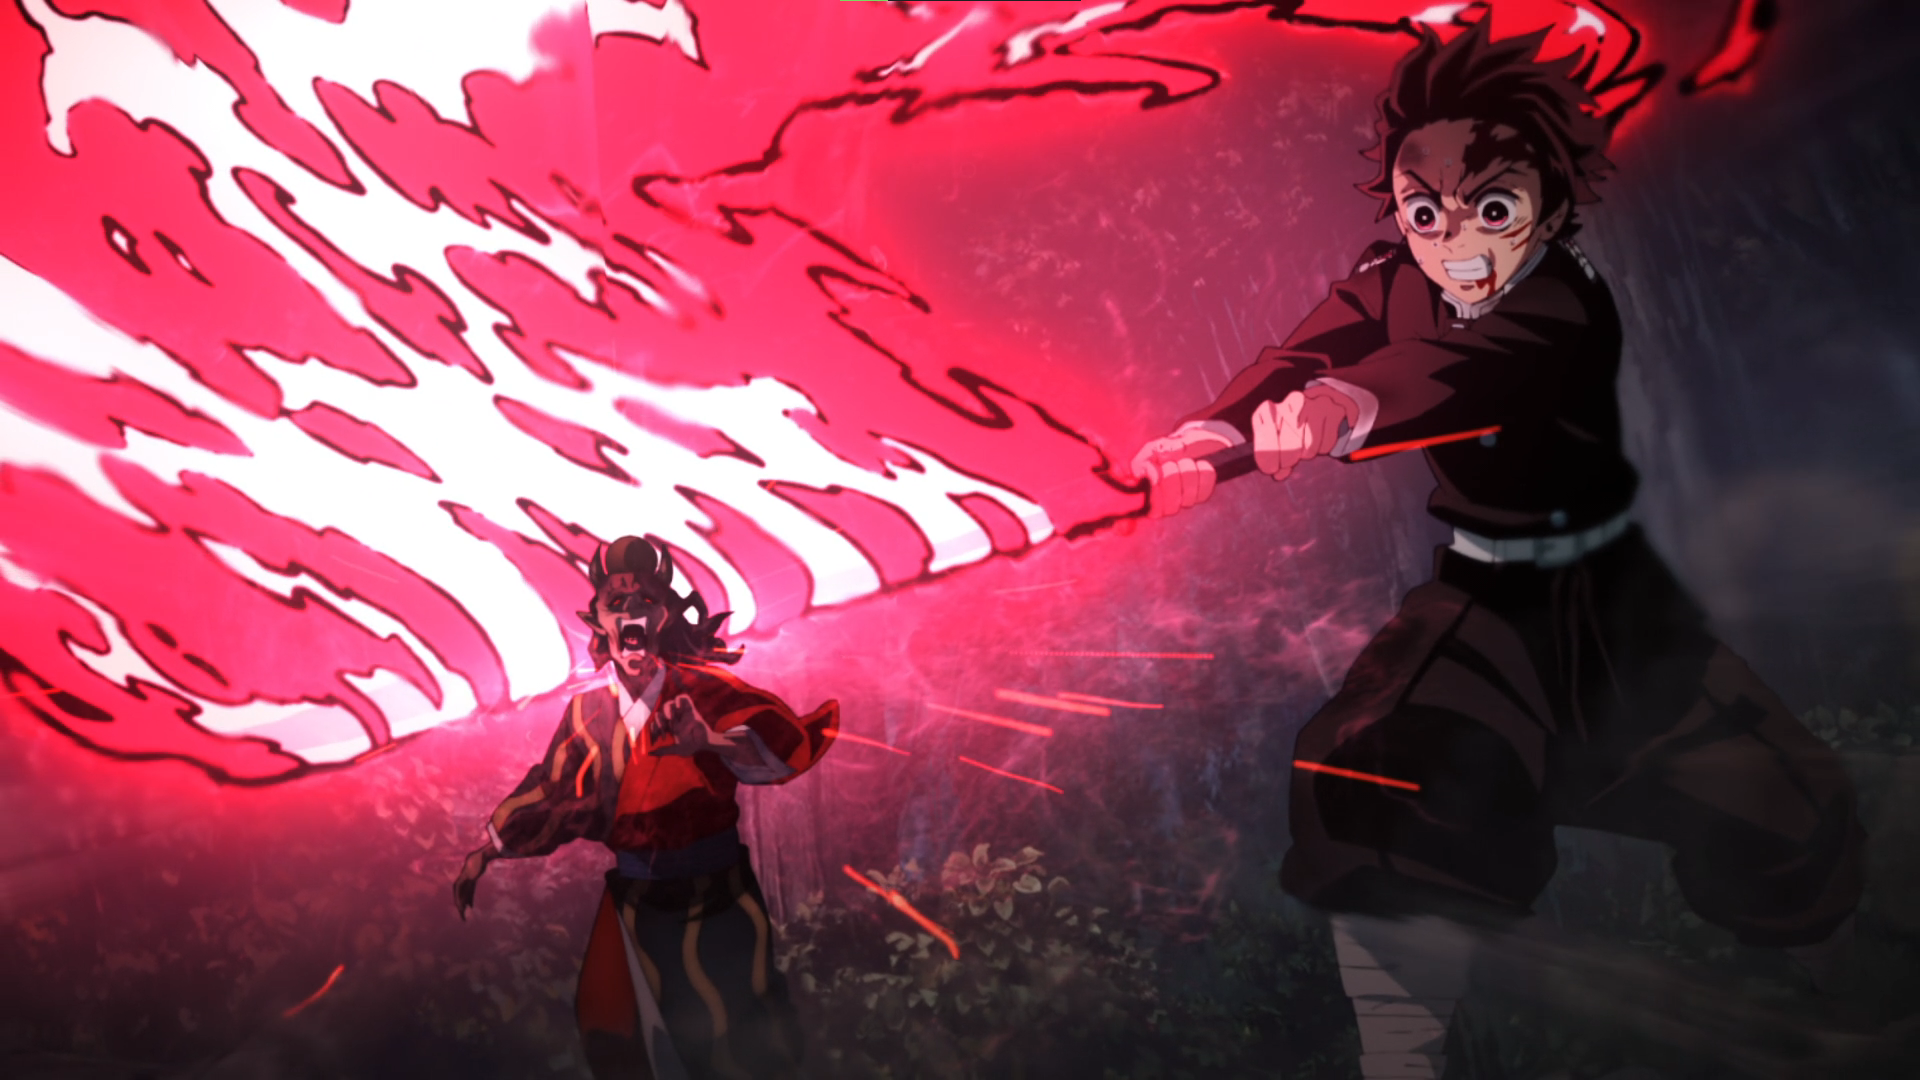 Anime 1920x1080 Kimetsu no Yaiba Kamado Tanjiro sword demon Demon face fire forest trees anime anime screenshot anime boys blood uniform earring night